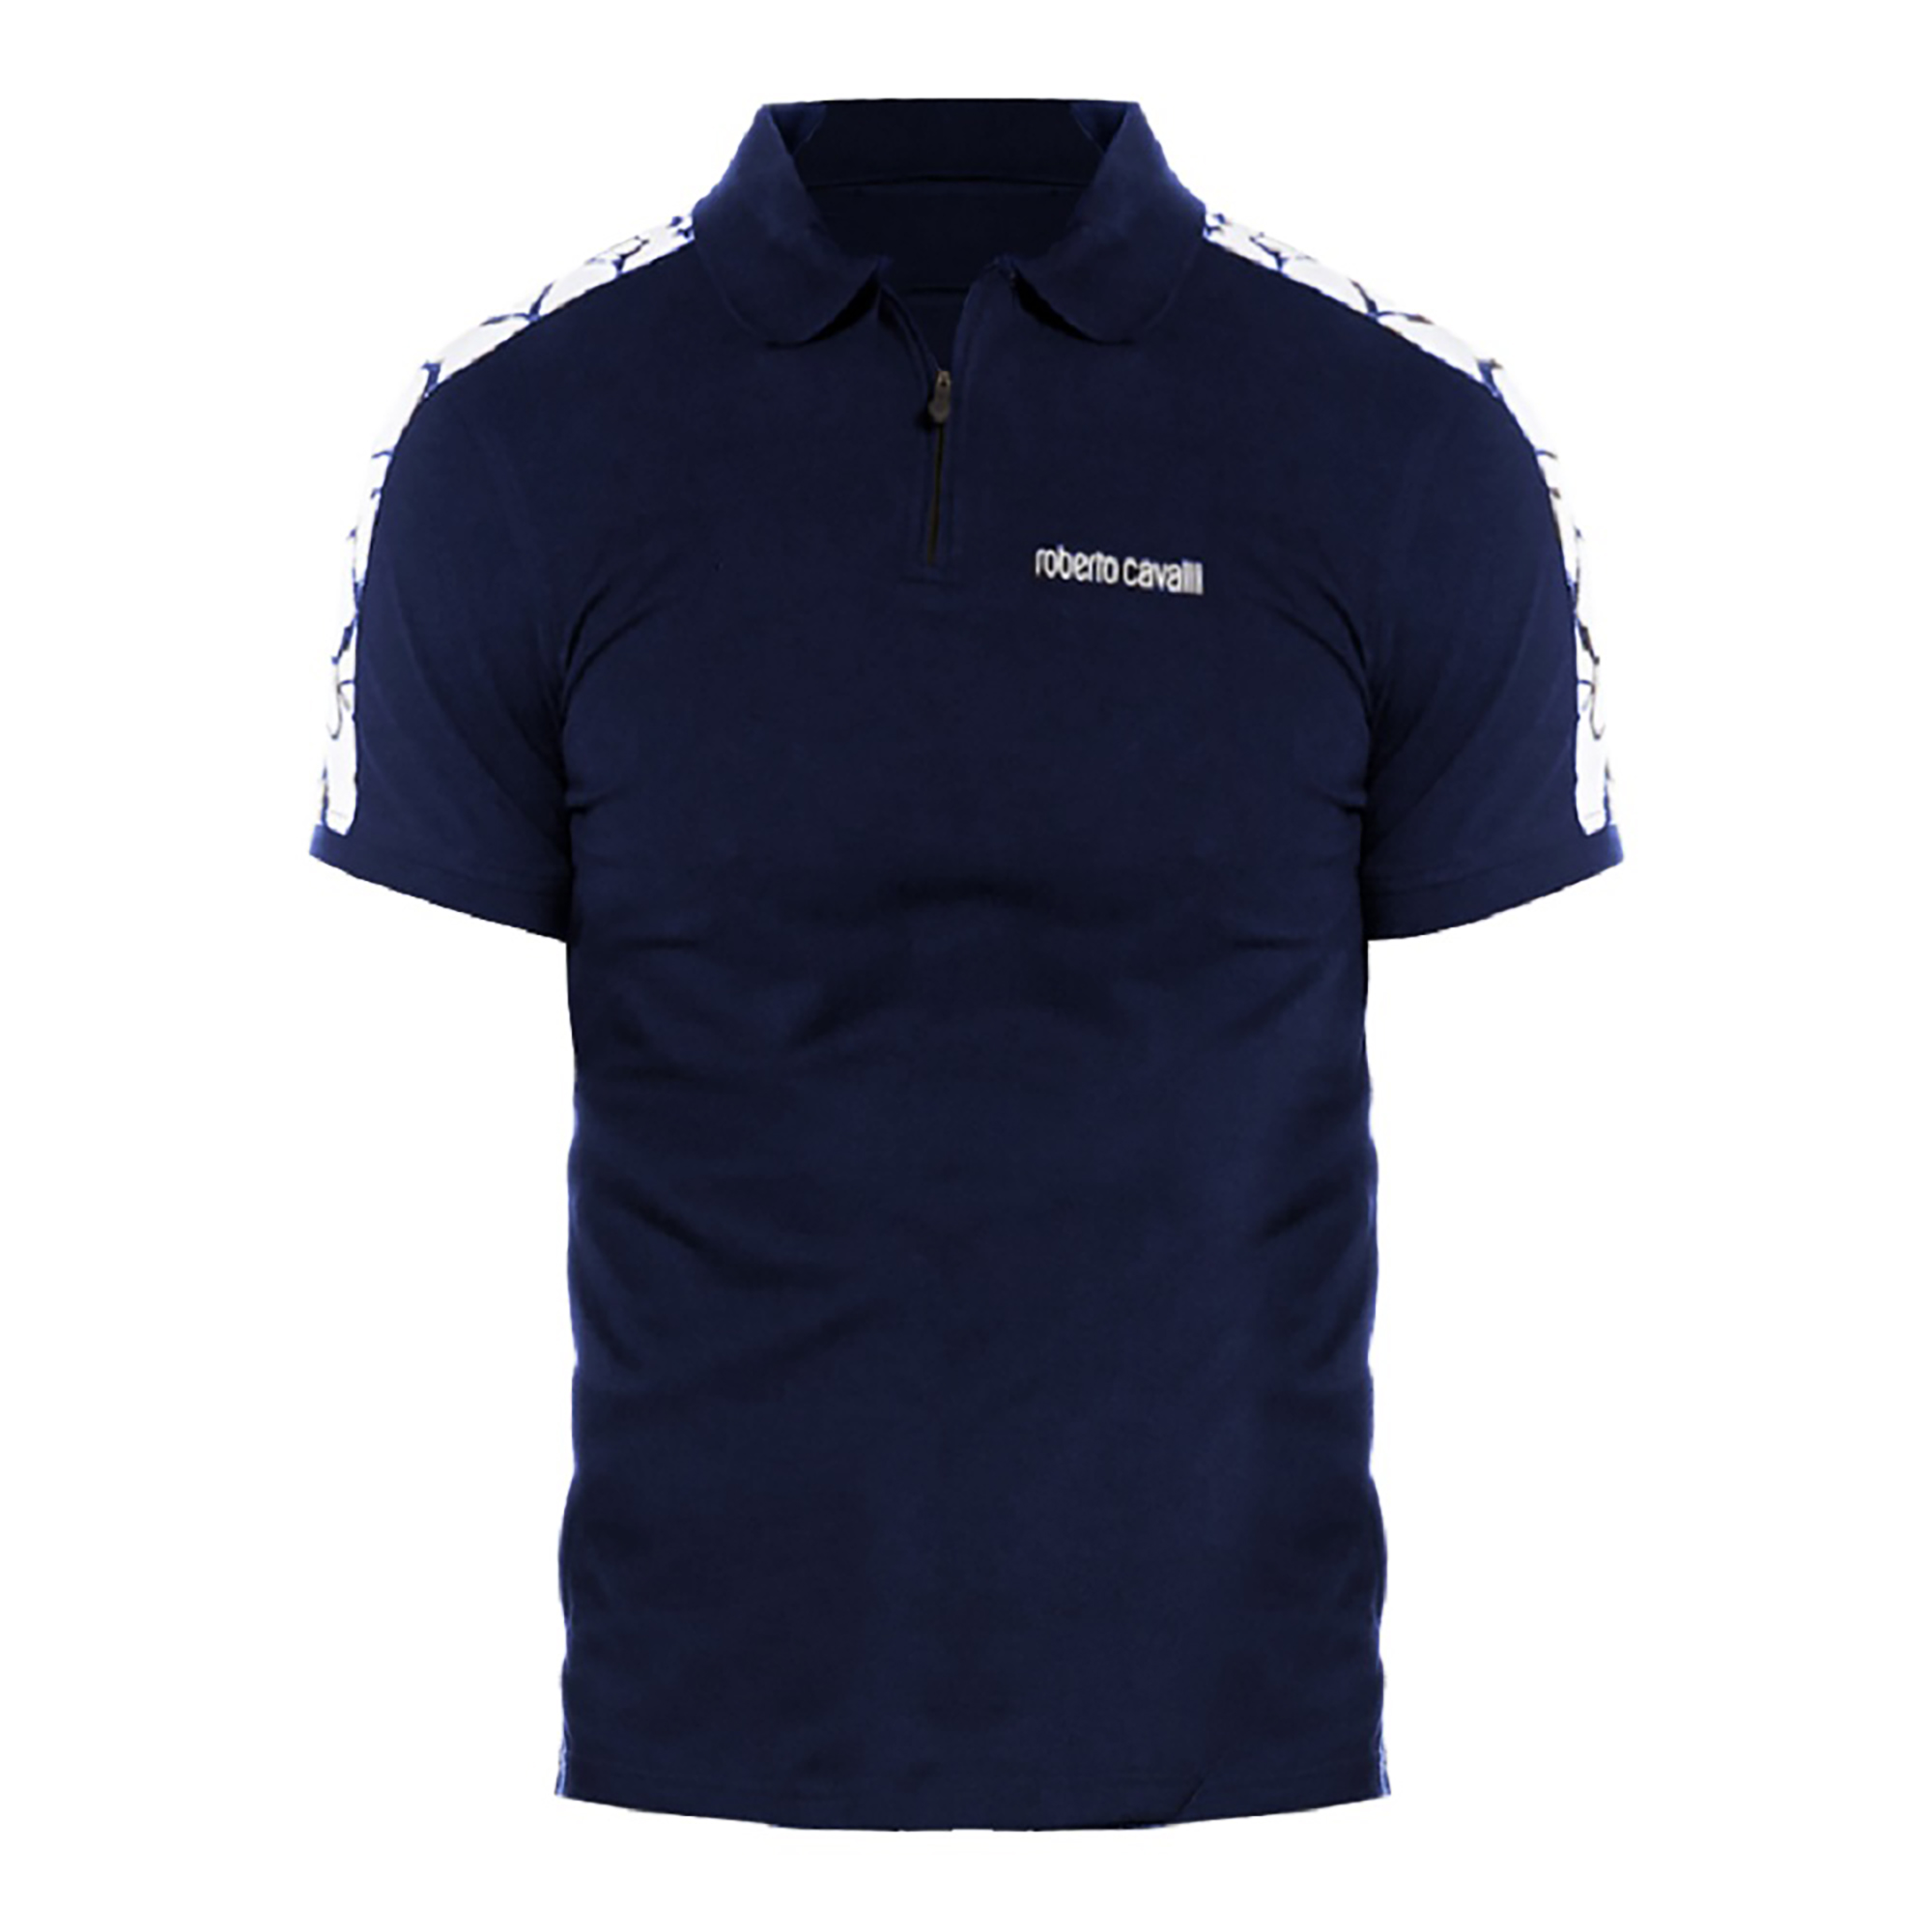 ROBERTO CAVALLI Men's Blue Stretch Cotton Half Zip Polo T-Shirt (XXL) - image 1 of 2